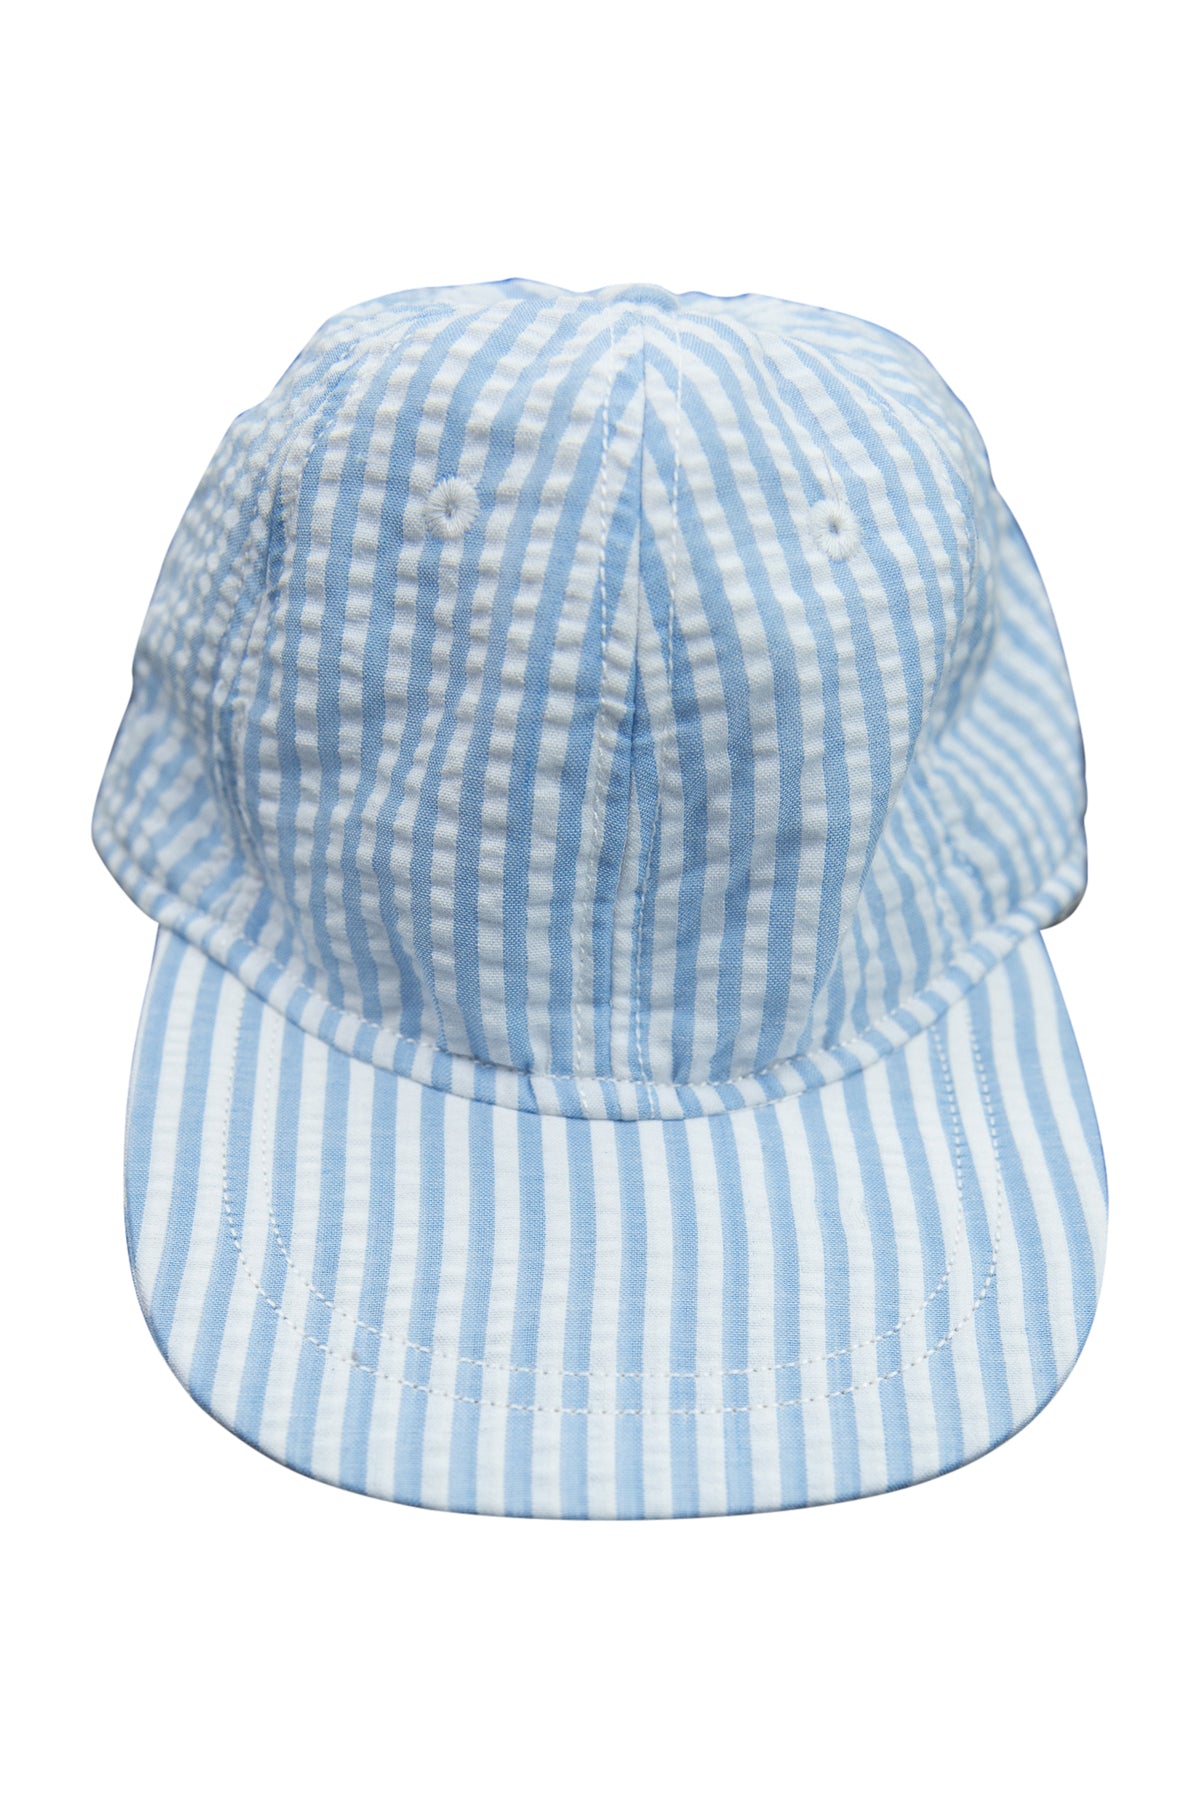 Blue Seersucker Baseball Hat